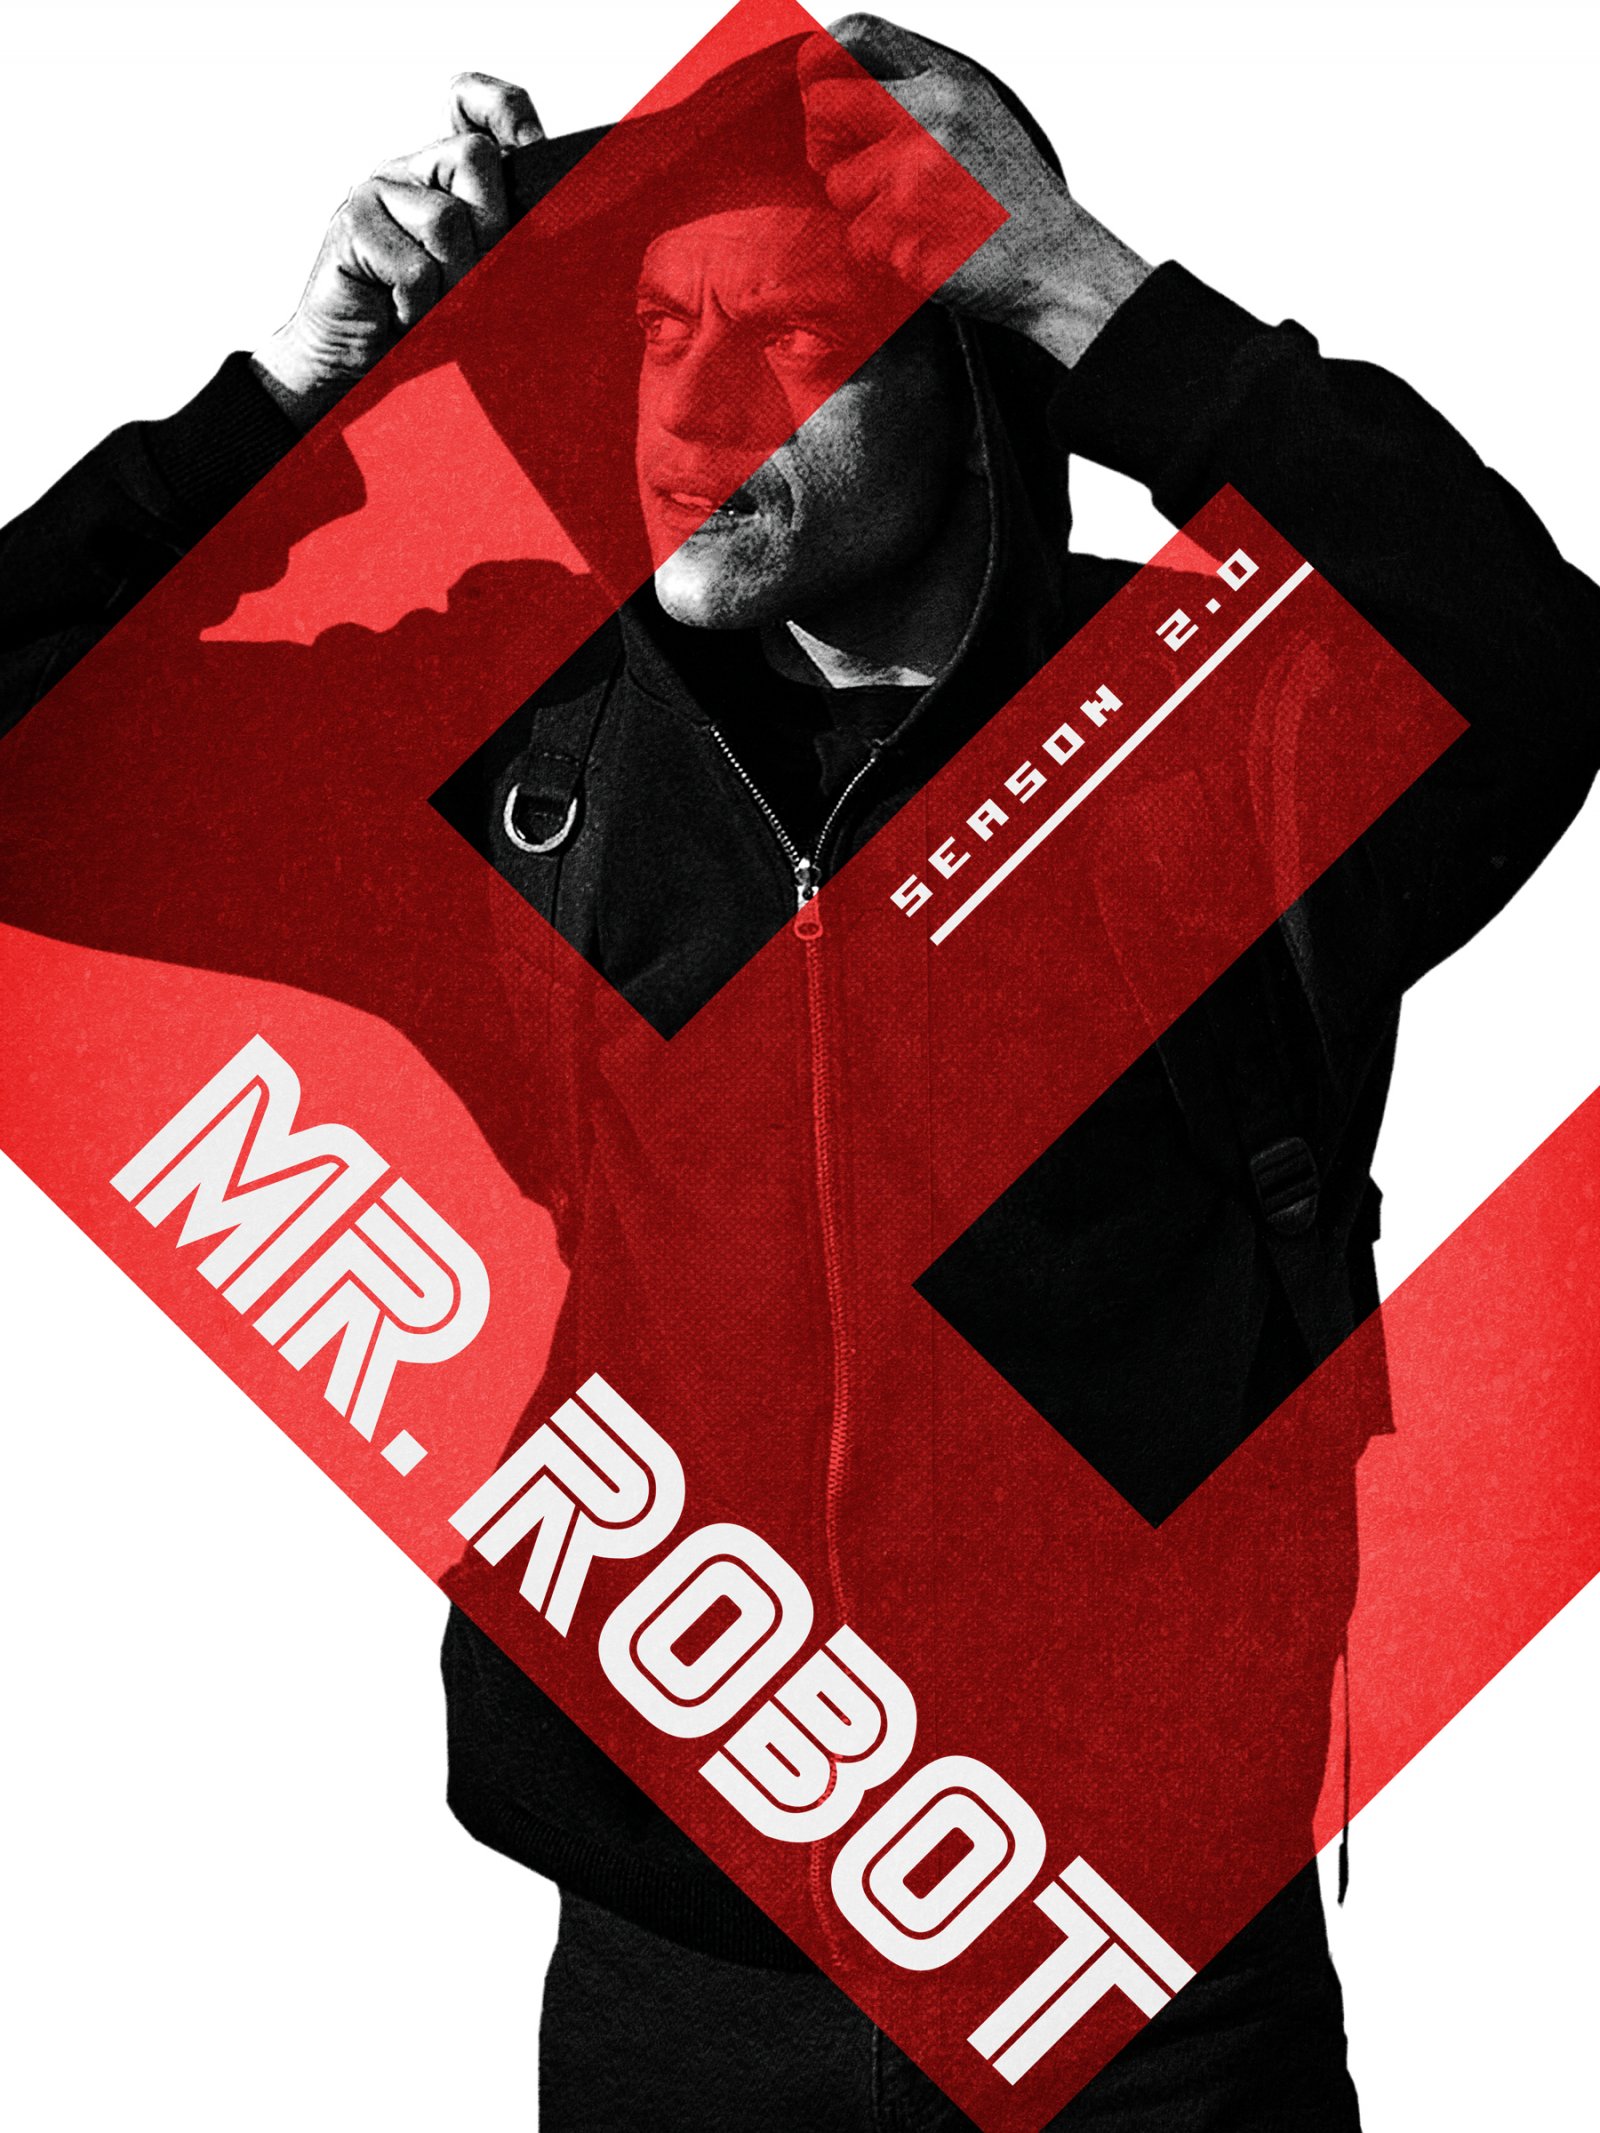 Mr. Robot Design Contest - Season 2.0 - PosterSpy